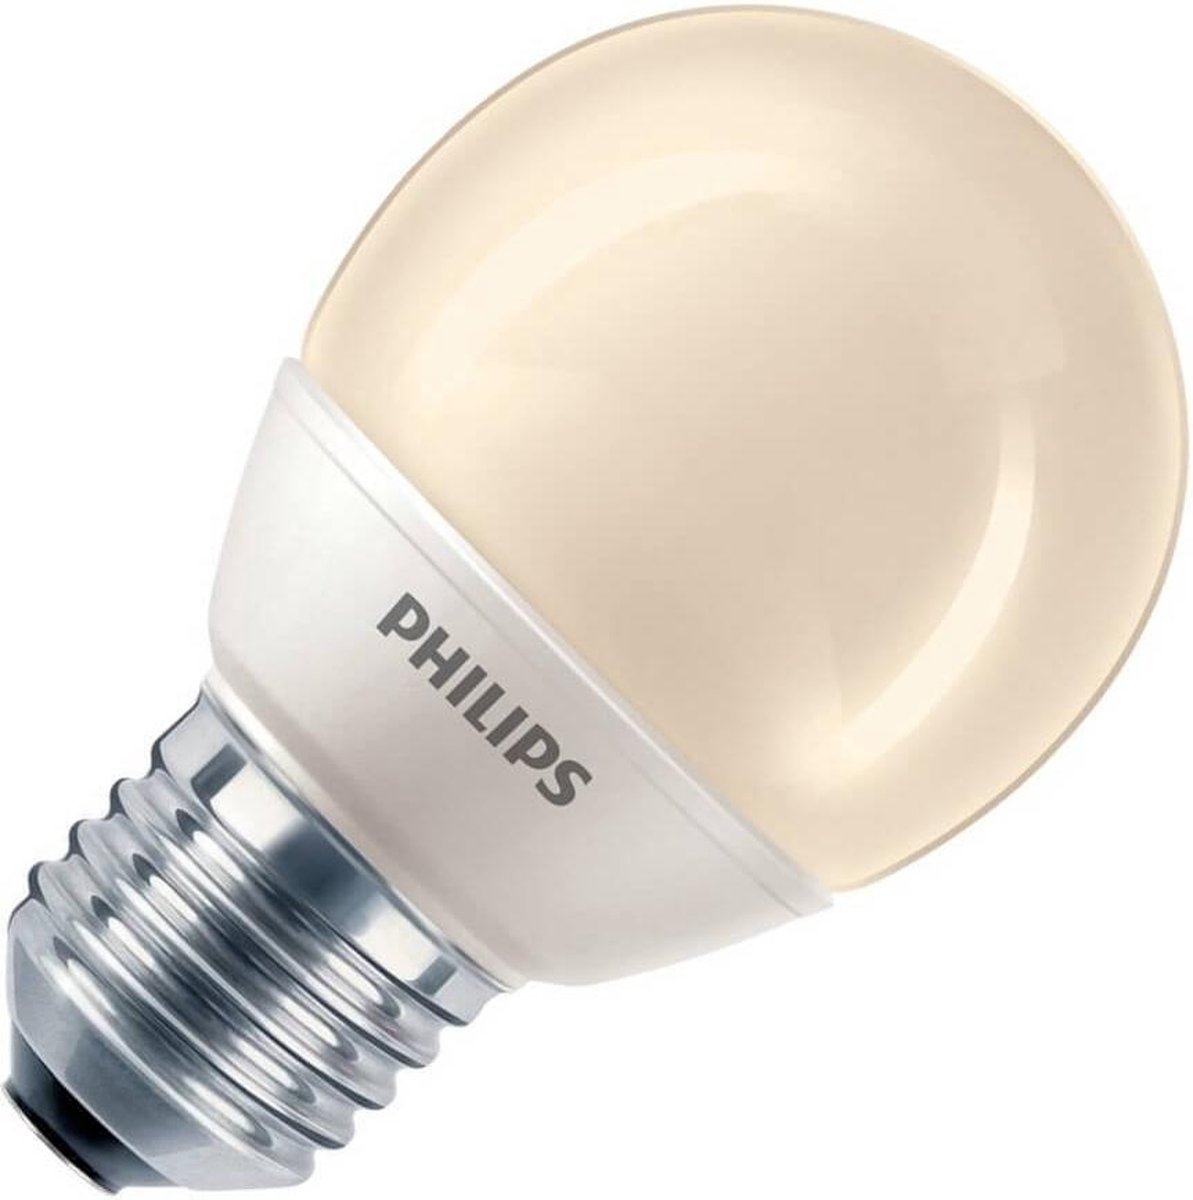 Philips Flame kogel - Spaarlamp - 8W E27 | bol.com